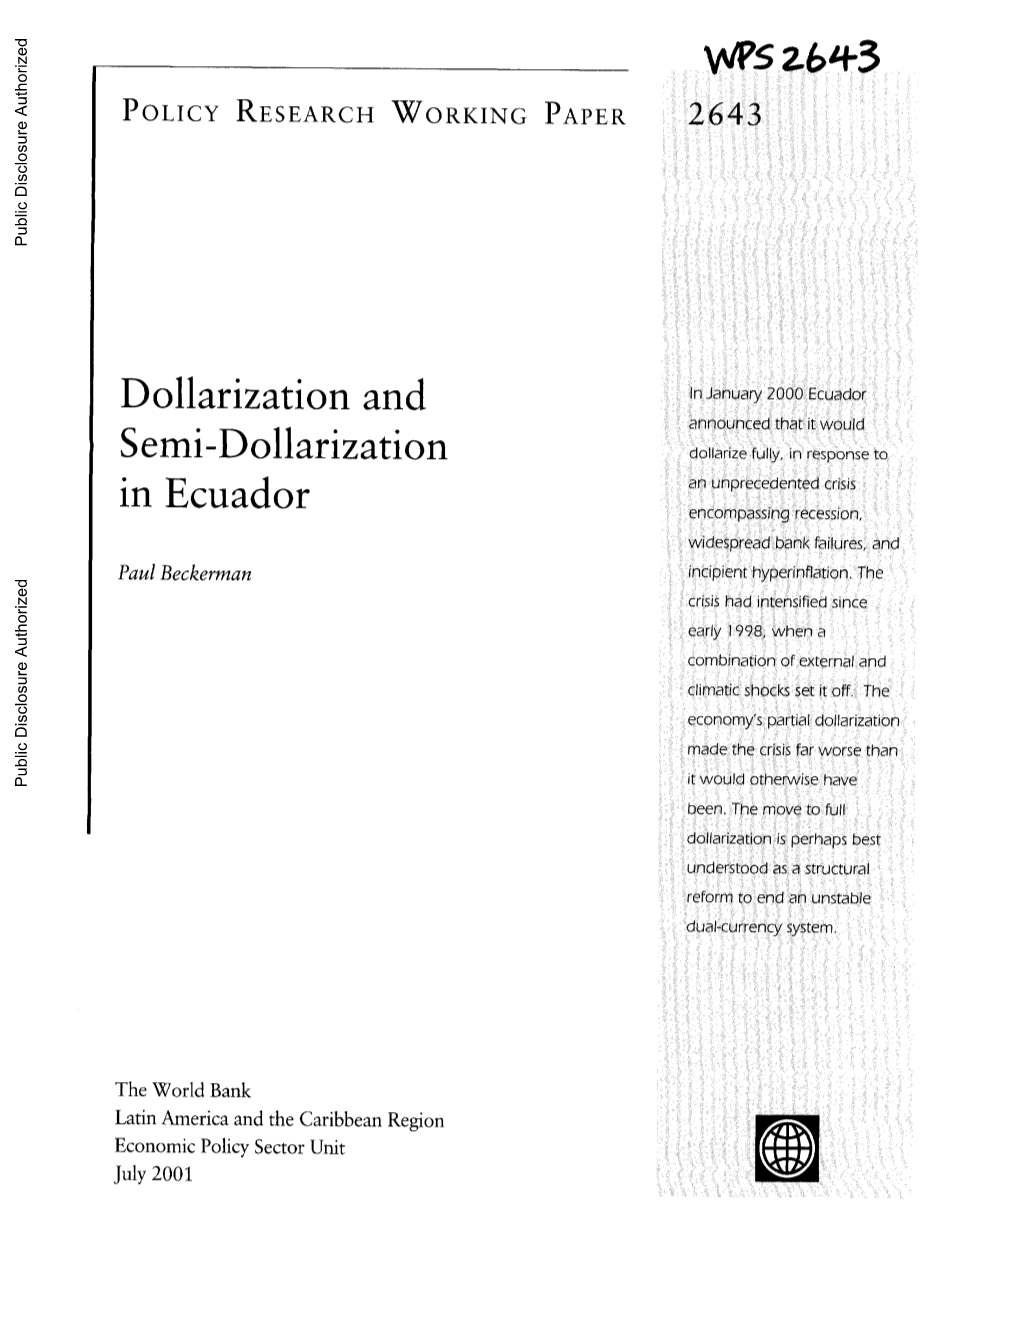 Dollarization and Semi-Dollarization in Ecuador